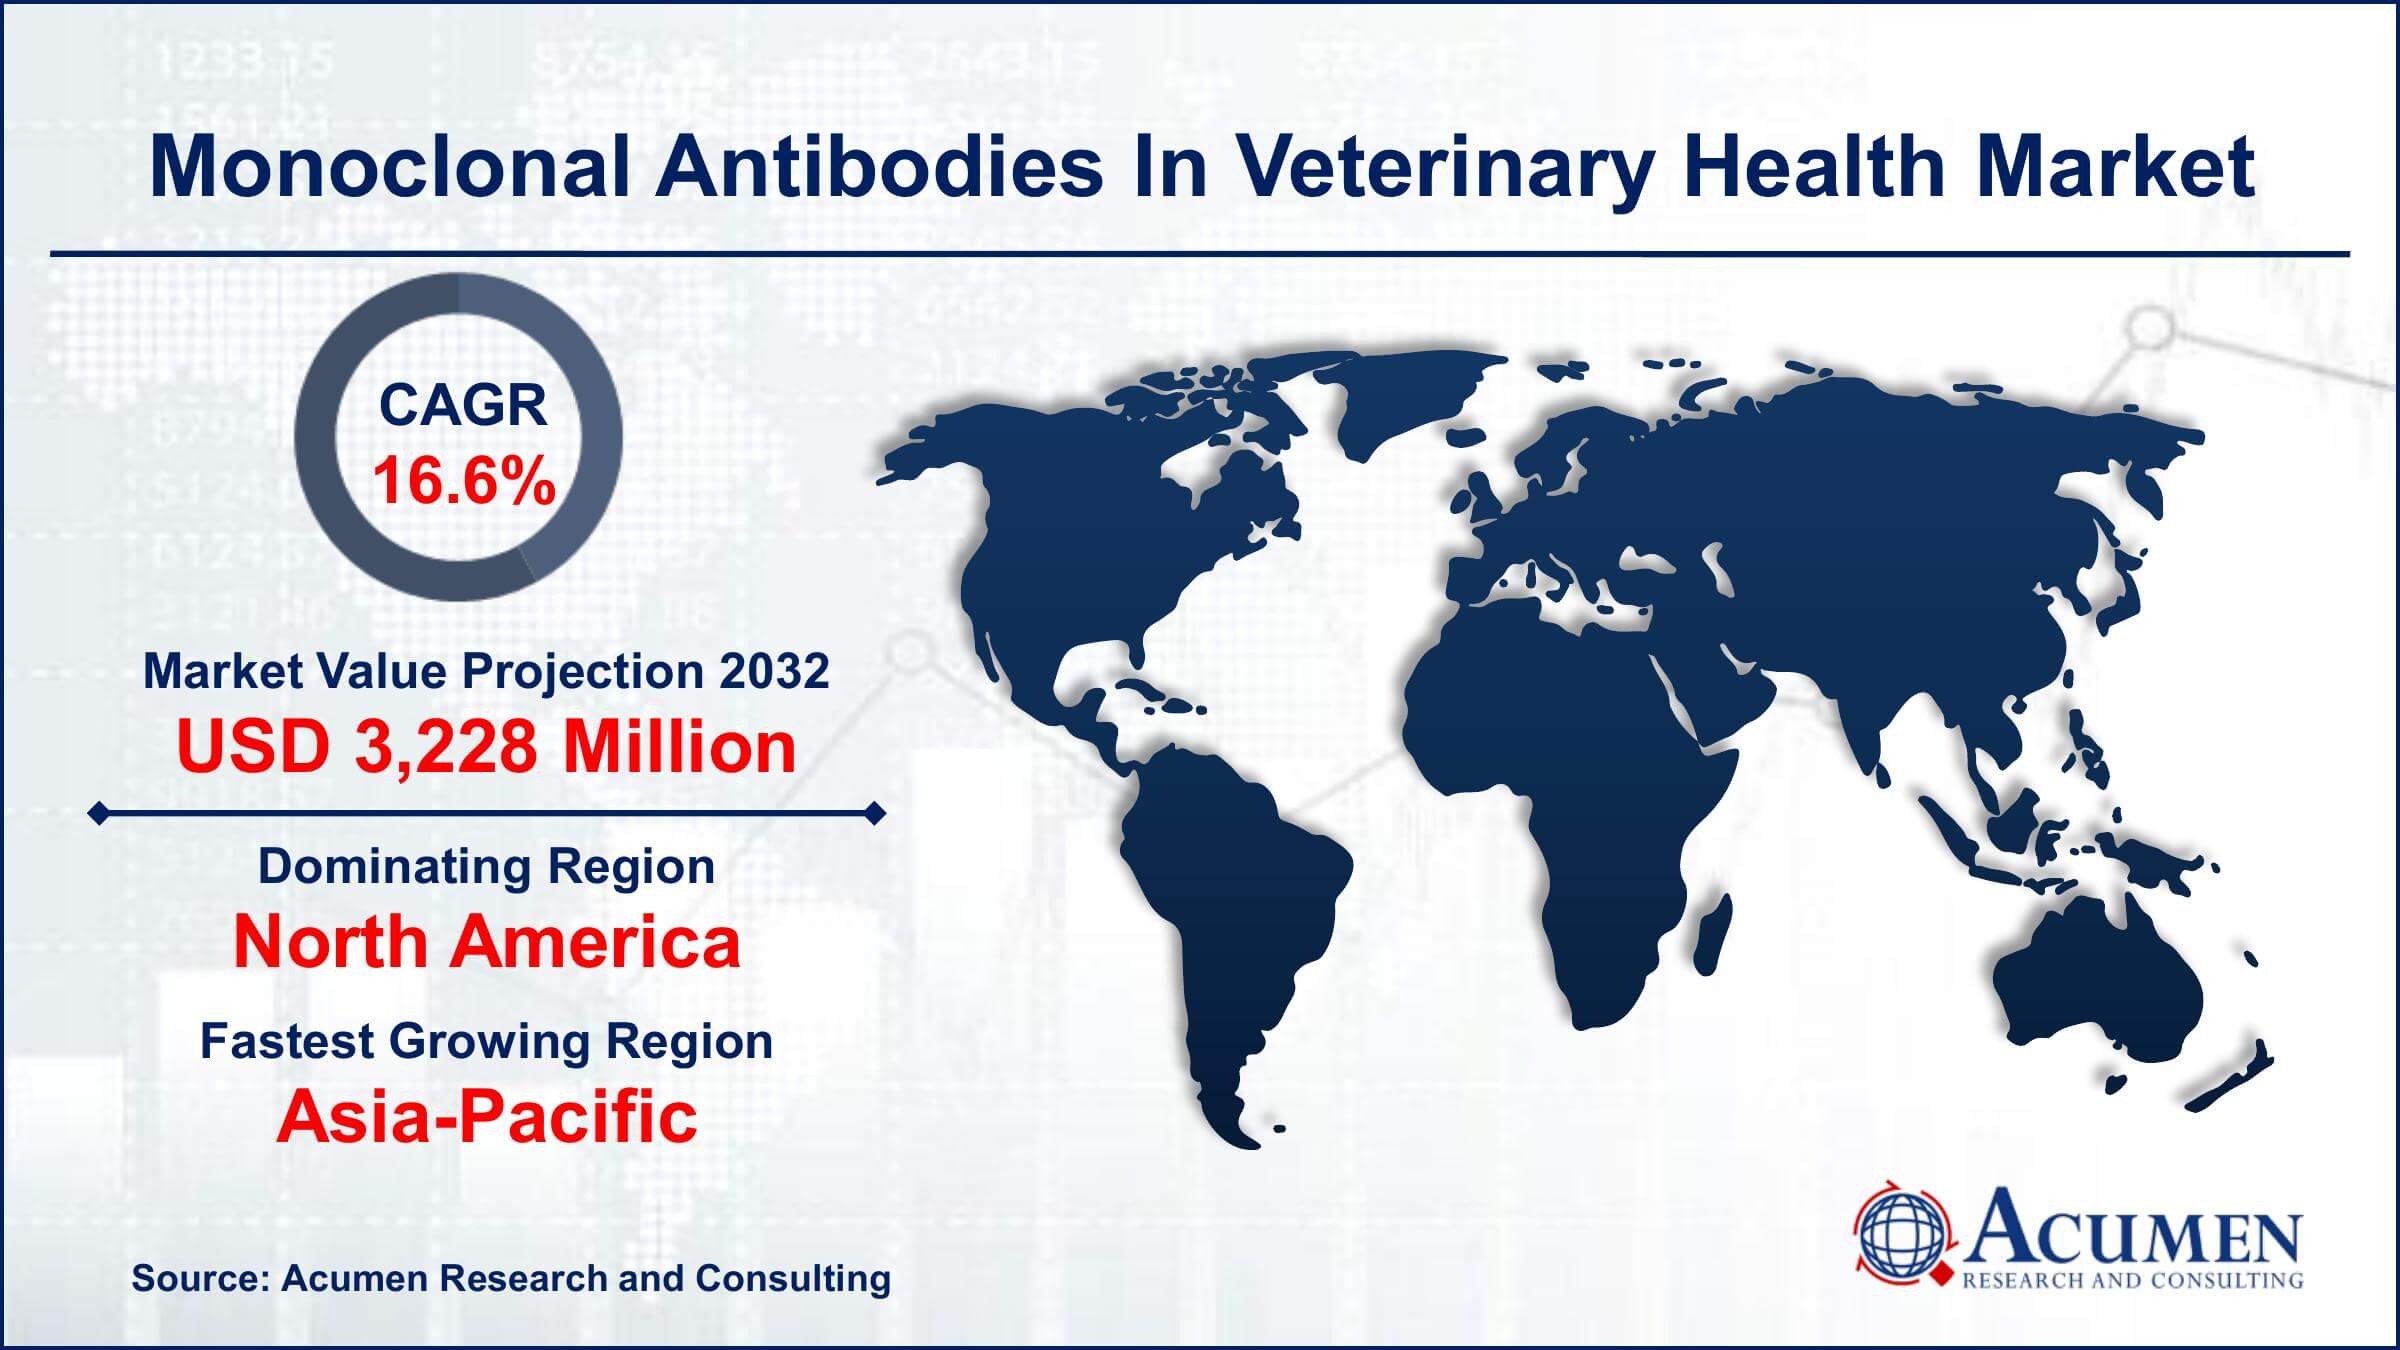 Monoclonal Antibodies in Veterinary Health Market Dynamics